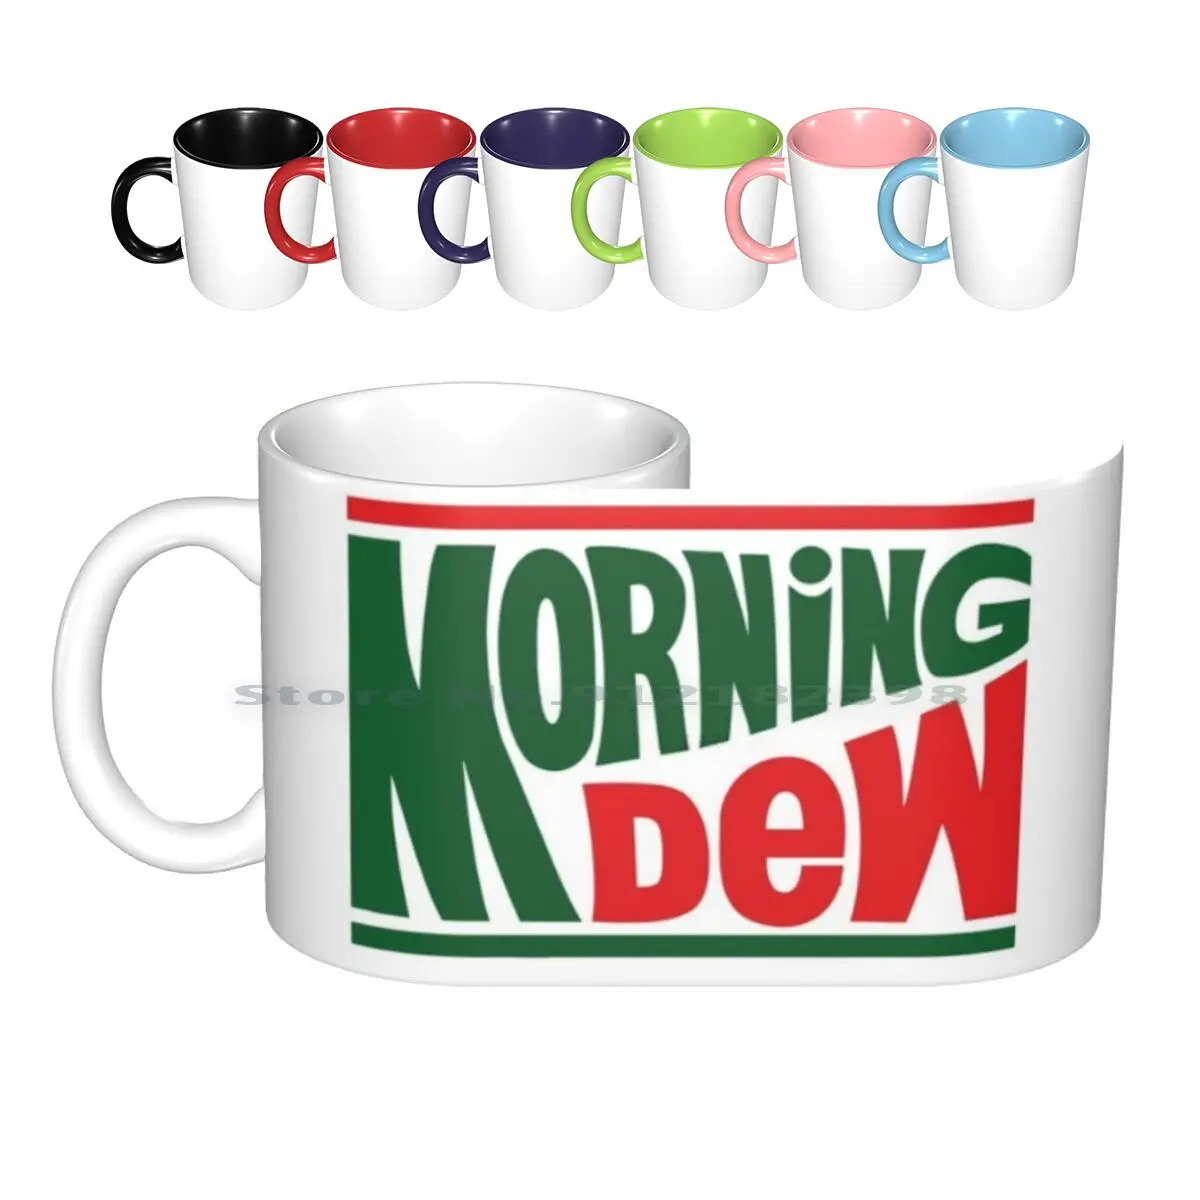 

Grateful Morning Dew Ceramic Mugs Coffee Cups Milk Tea Mug Grateful Dead Morning Dew Jerry Weir Hippie 60s Song Parody Sixties